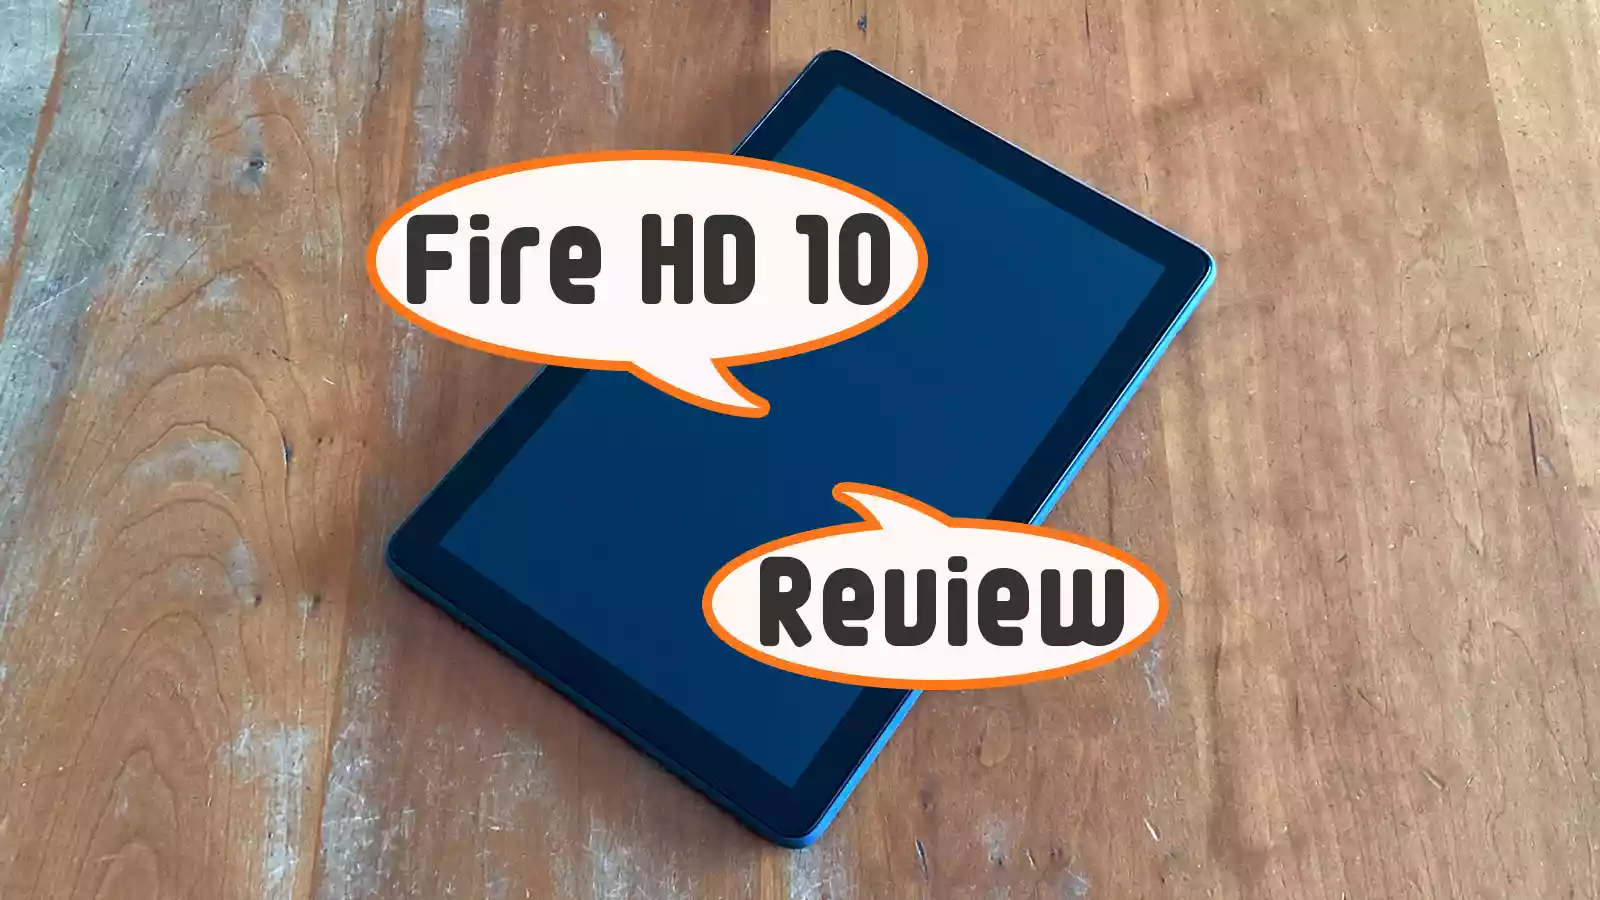 Amazon Fireタブレット Fire HD 10 Plus キッズモデル 新旧モデル 比較 レビュー